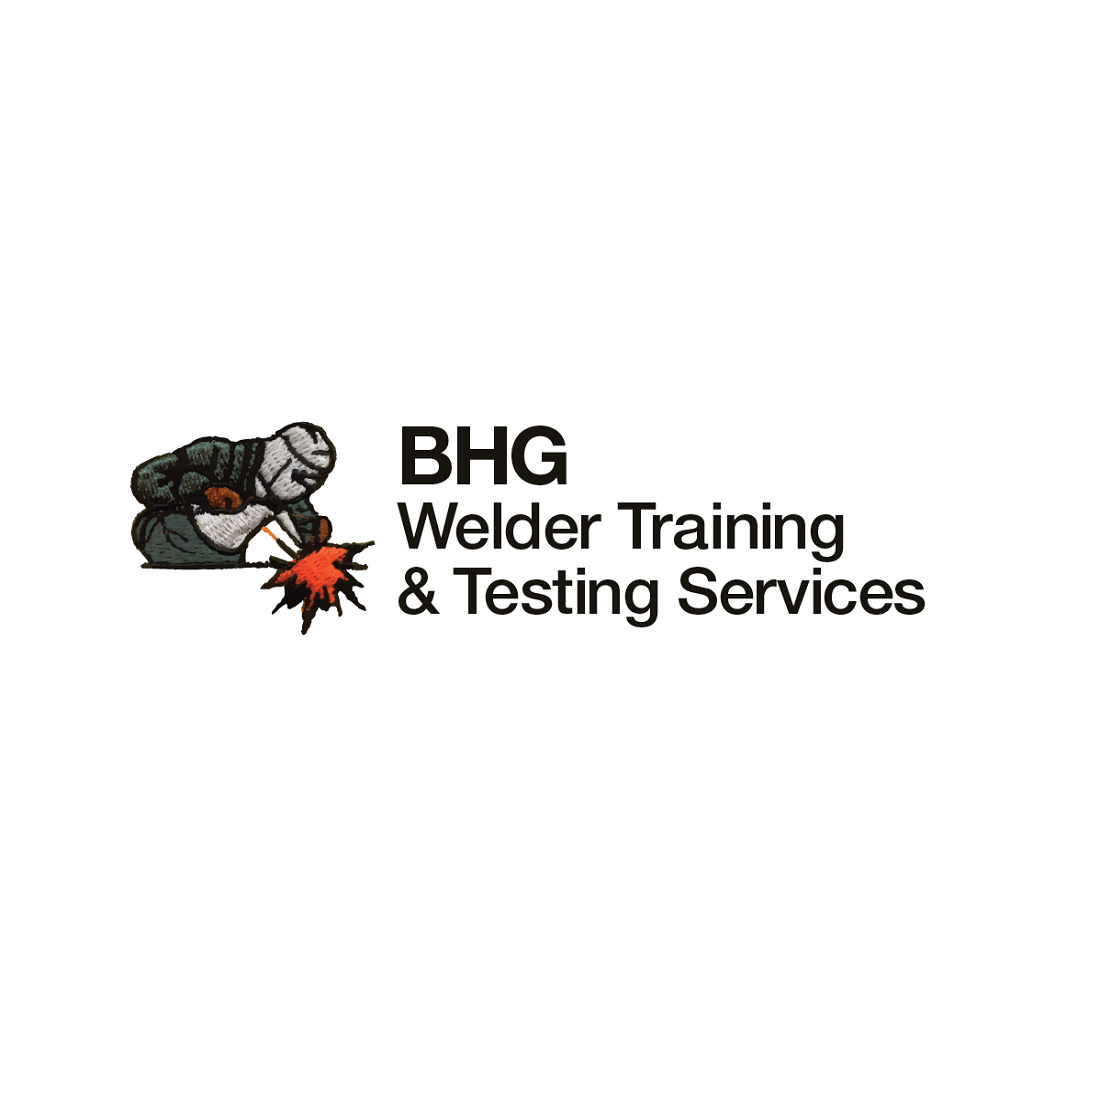 BHG Welder Training